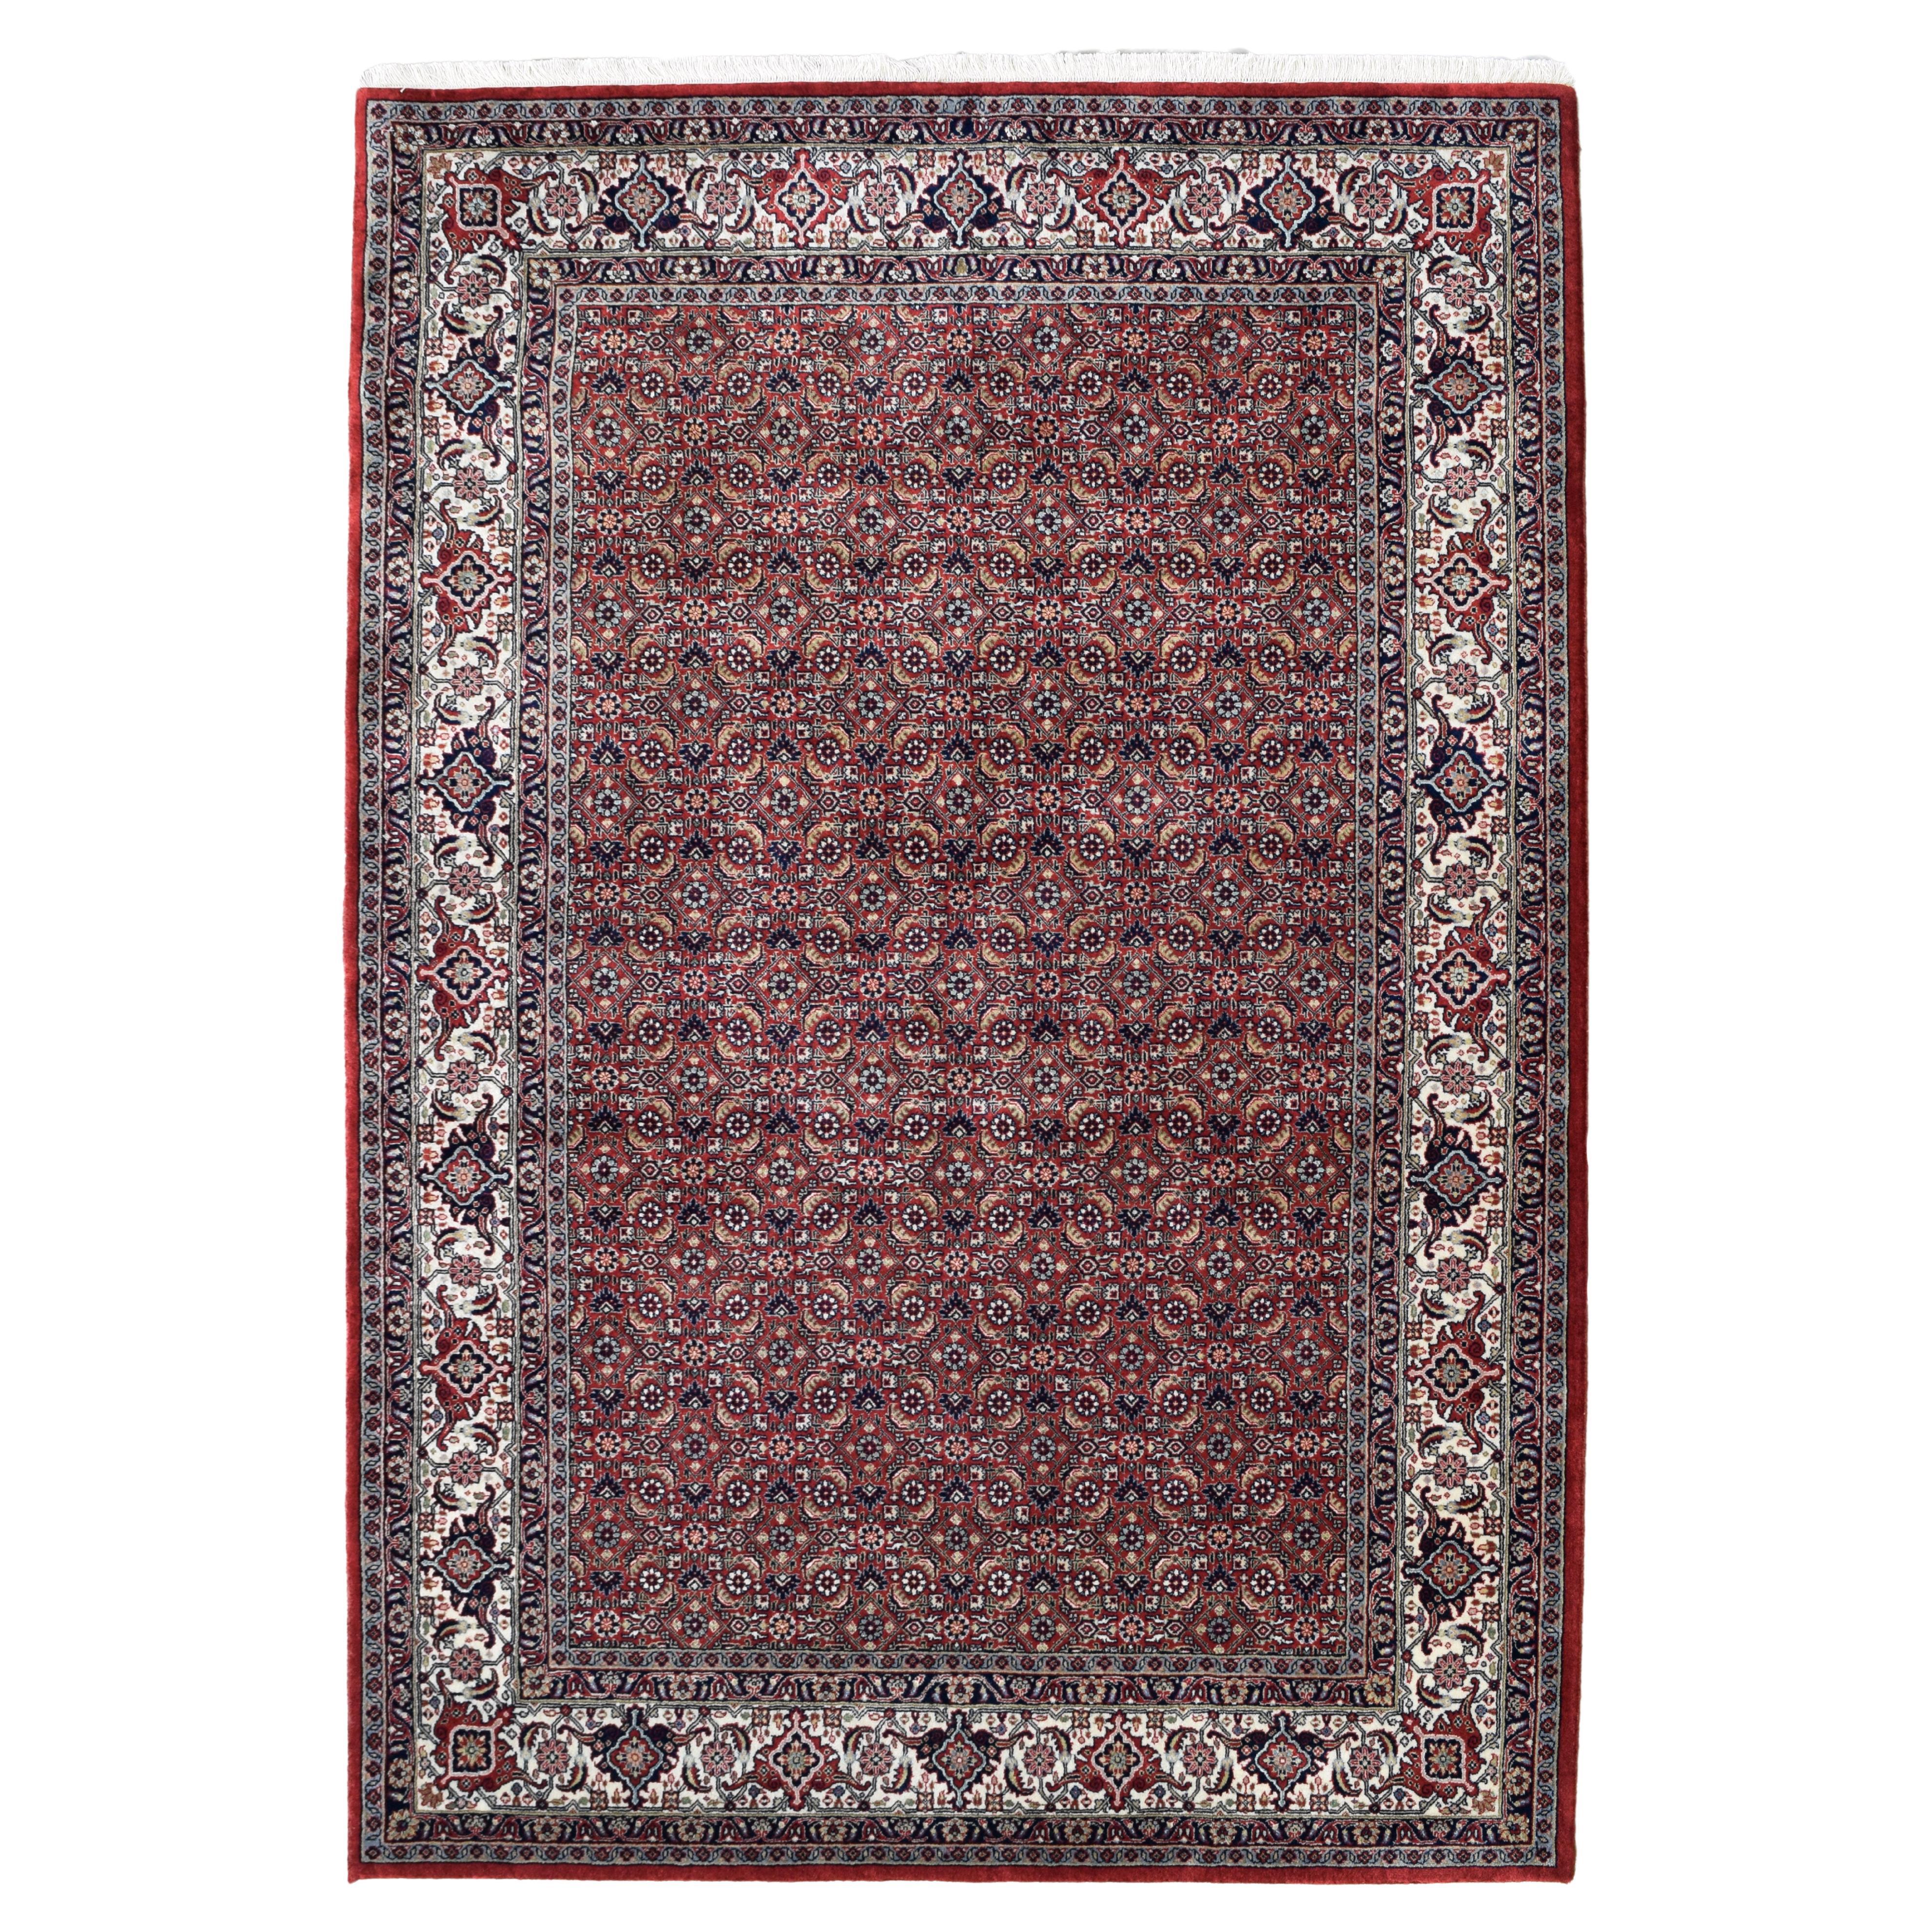 Classic Hand-Knotted Bidjar Carpet in Red, Indigo, and Cream Wool, 5' x 7'